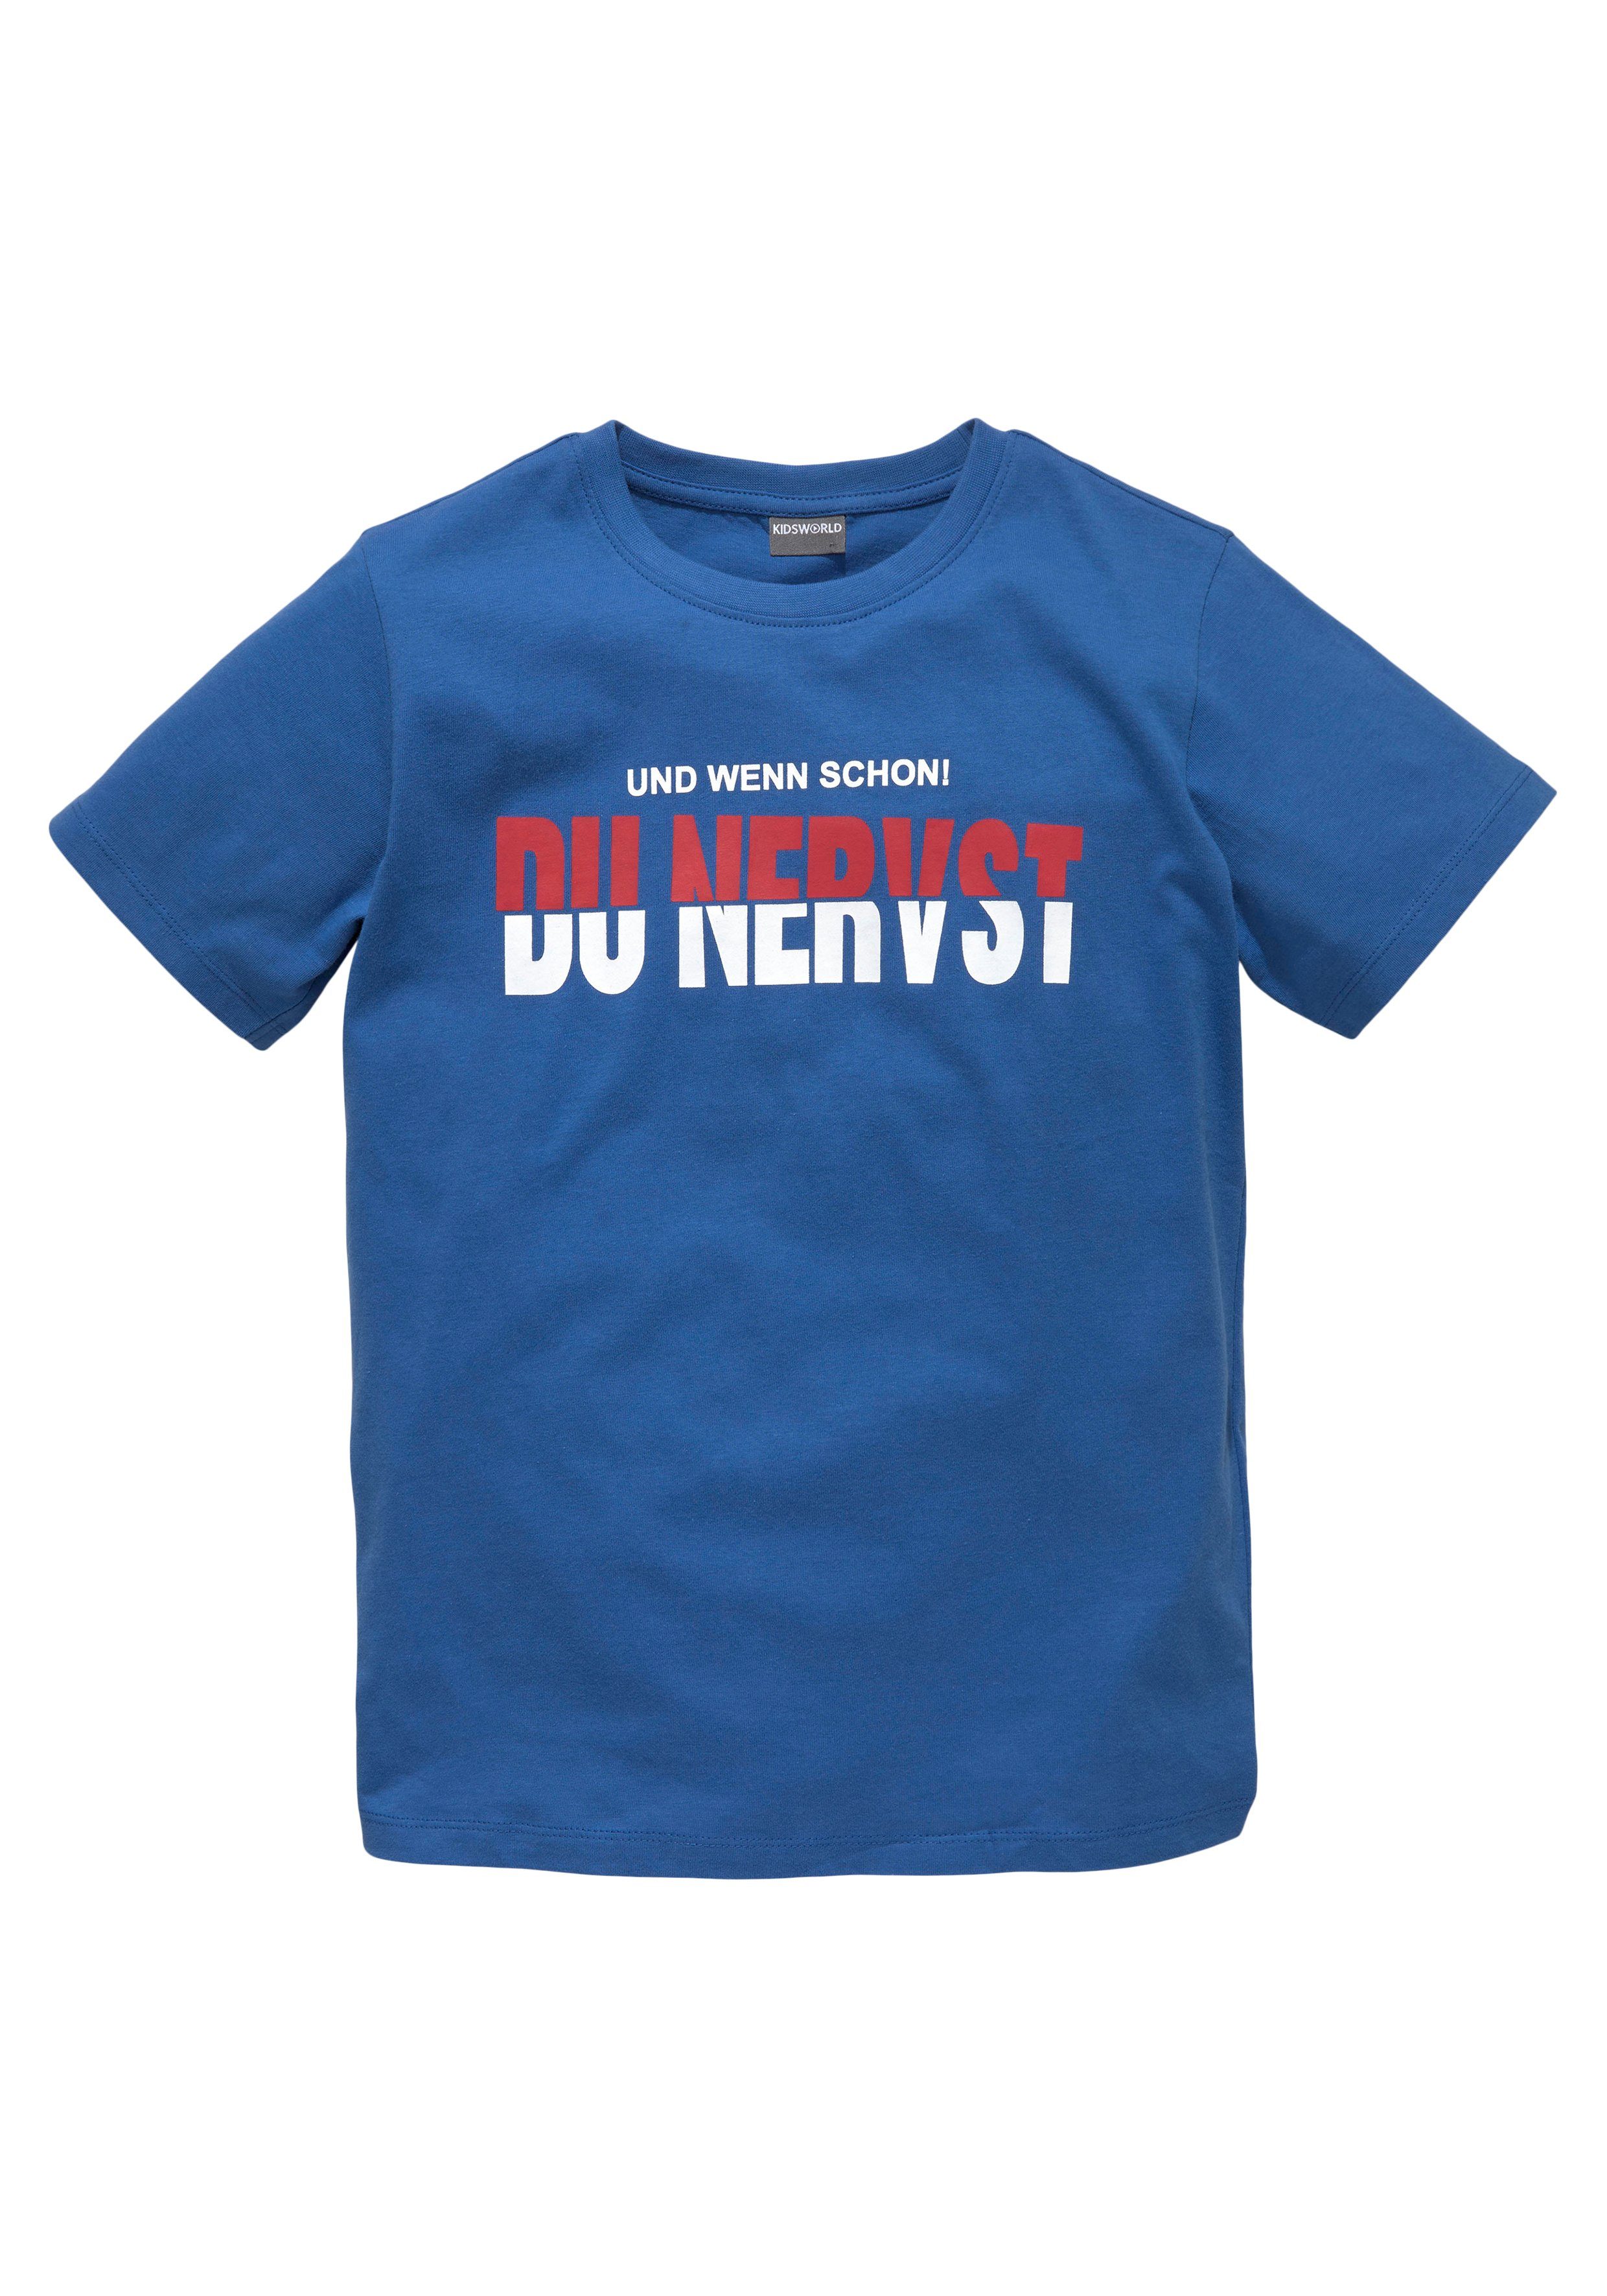 NERVST T-Shirt KIDSWORLD DU Sprücheshirt